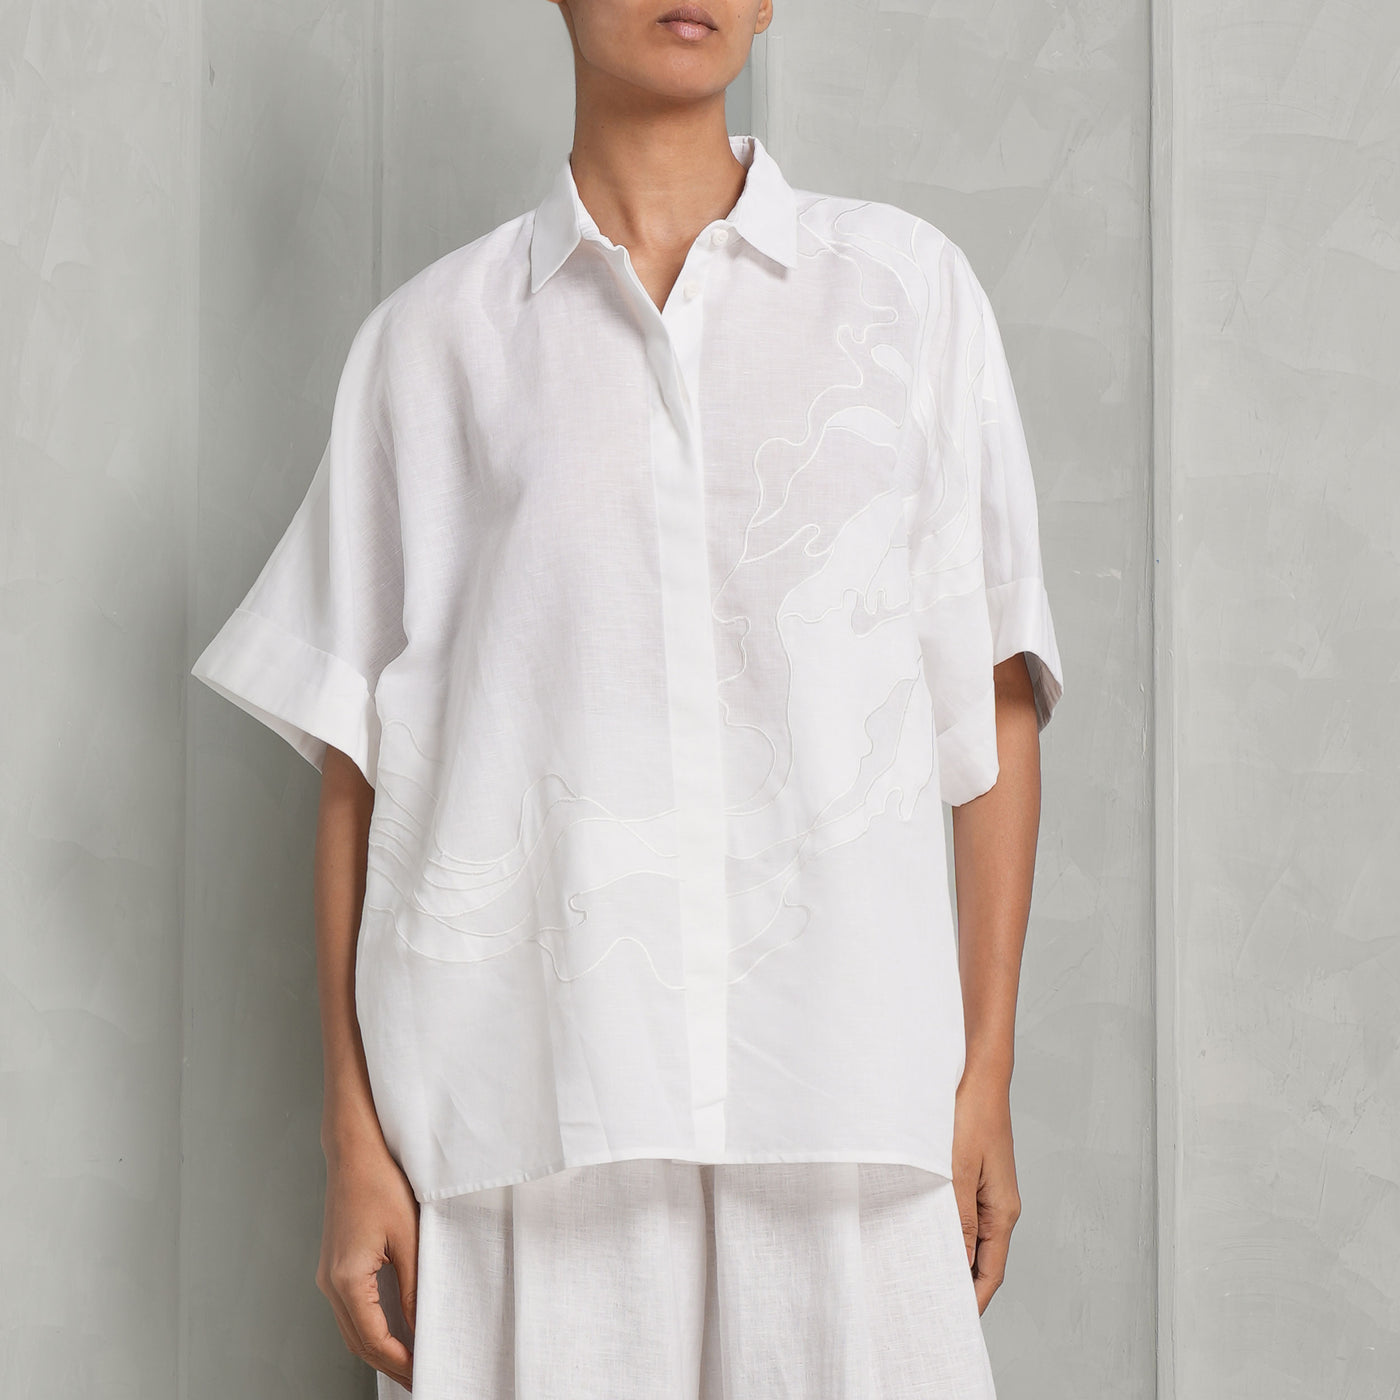 VARANA embroidered white linen shirt